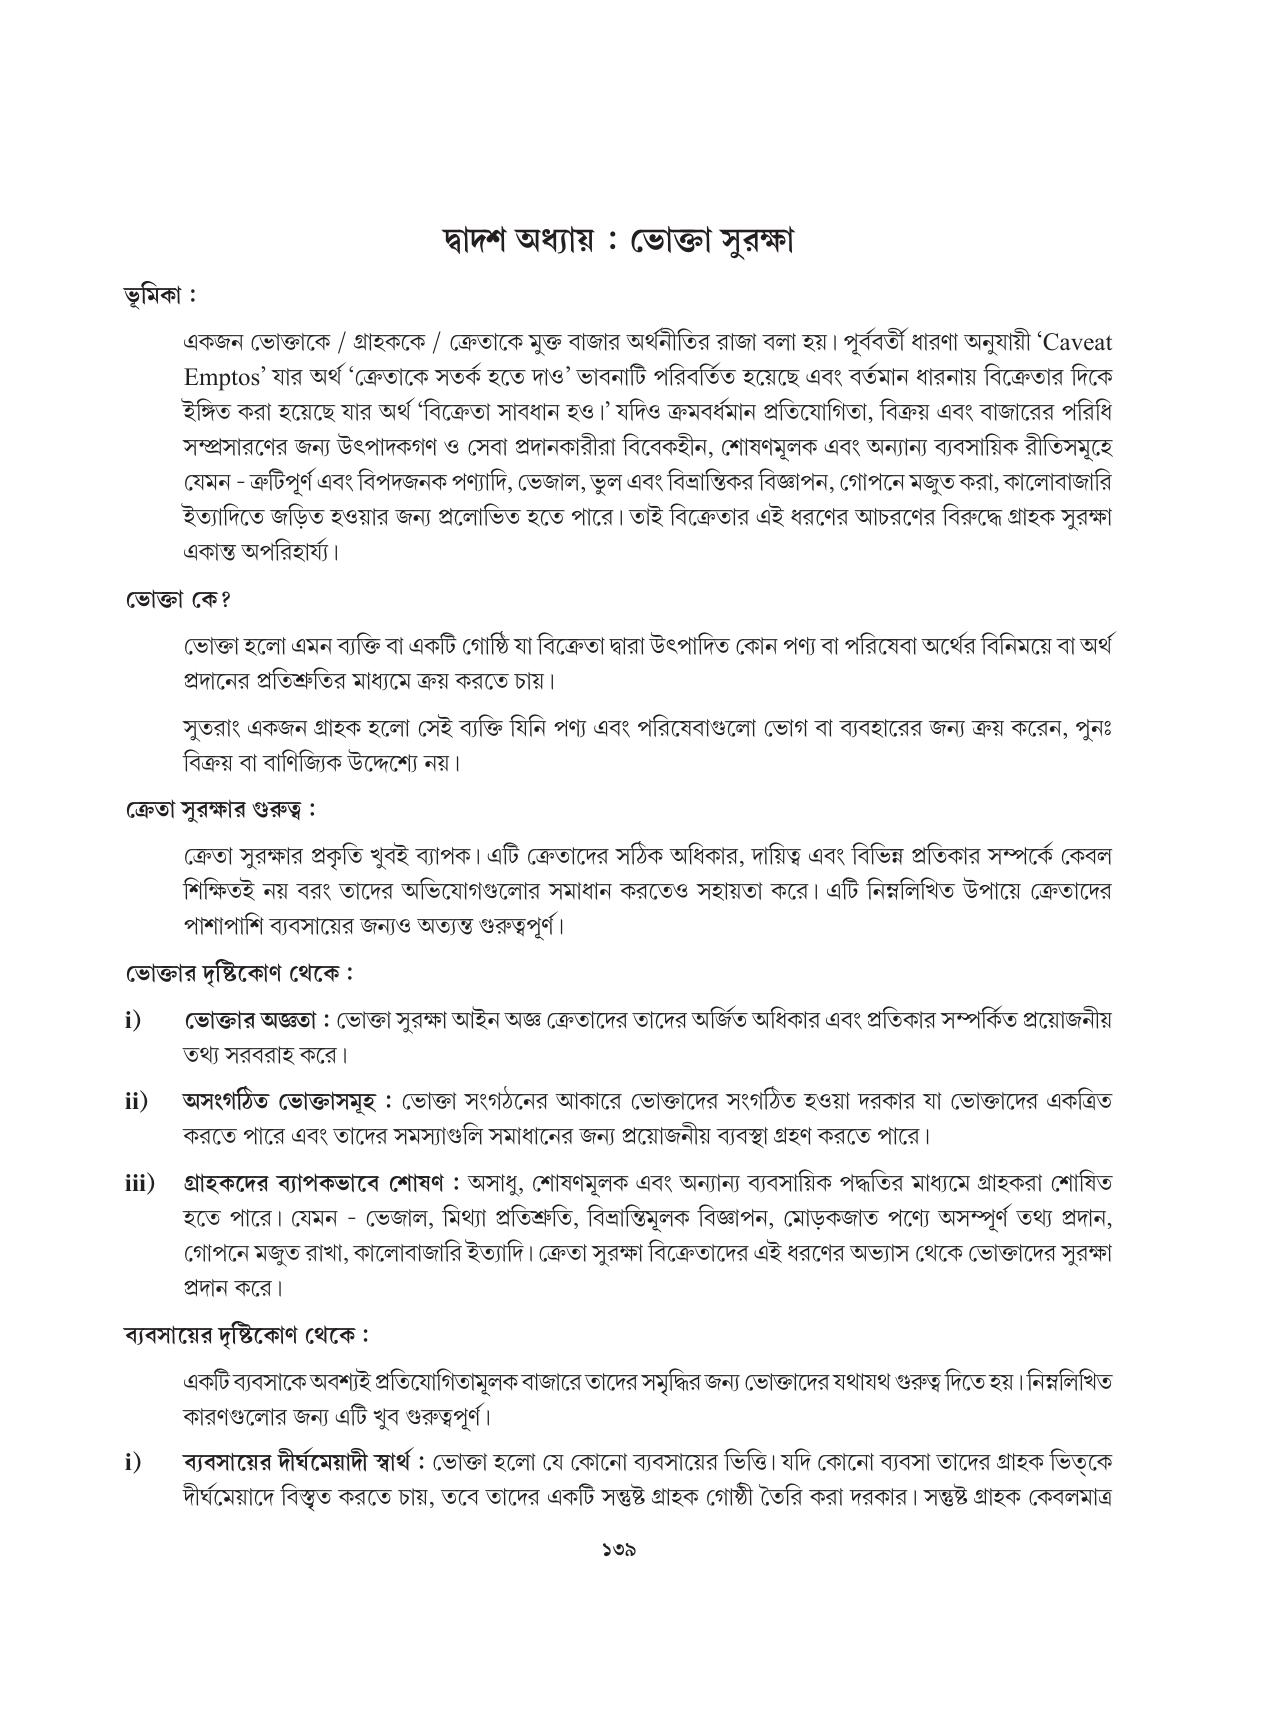 Tripura Board Class 12 Karbari Shastra Bengali Version Workbooks - Page 139